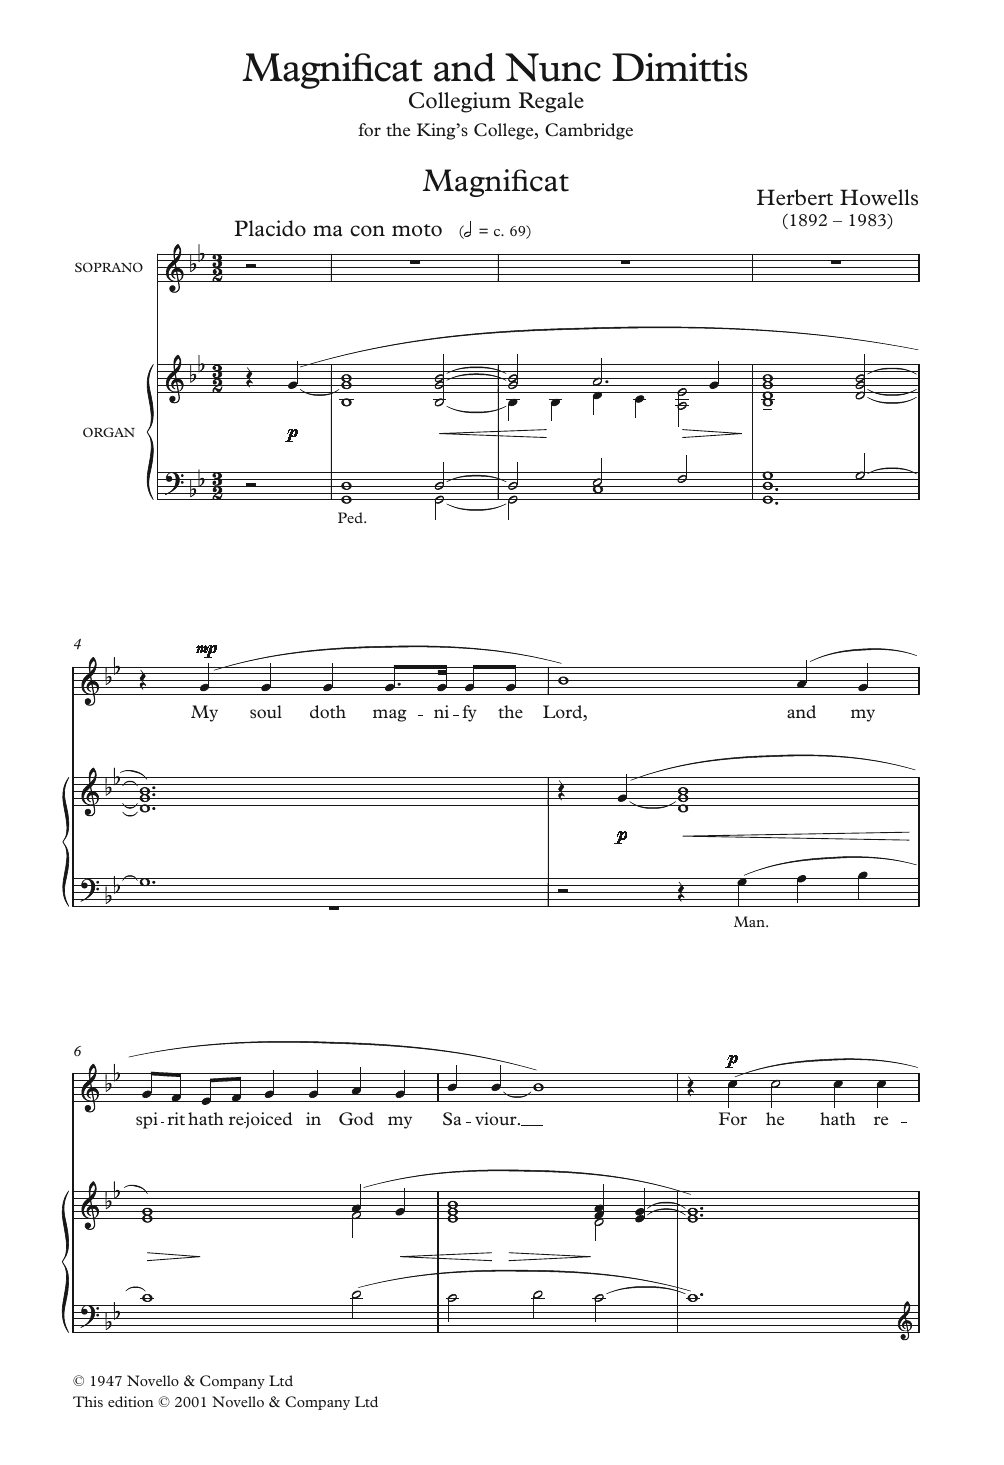 Herbert Howells Collegium Regale 1945 Magnificat And Nunc Dimittis Sheet Music Notes & Chords for Choir - Download or Print PDF